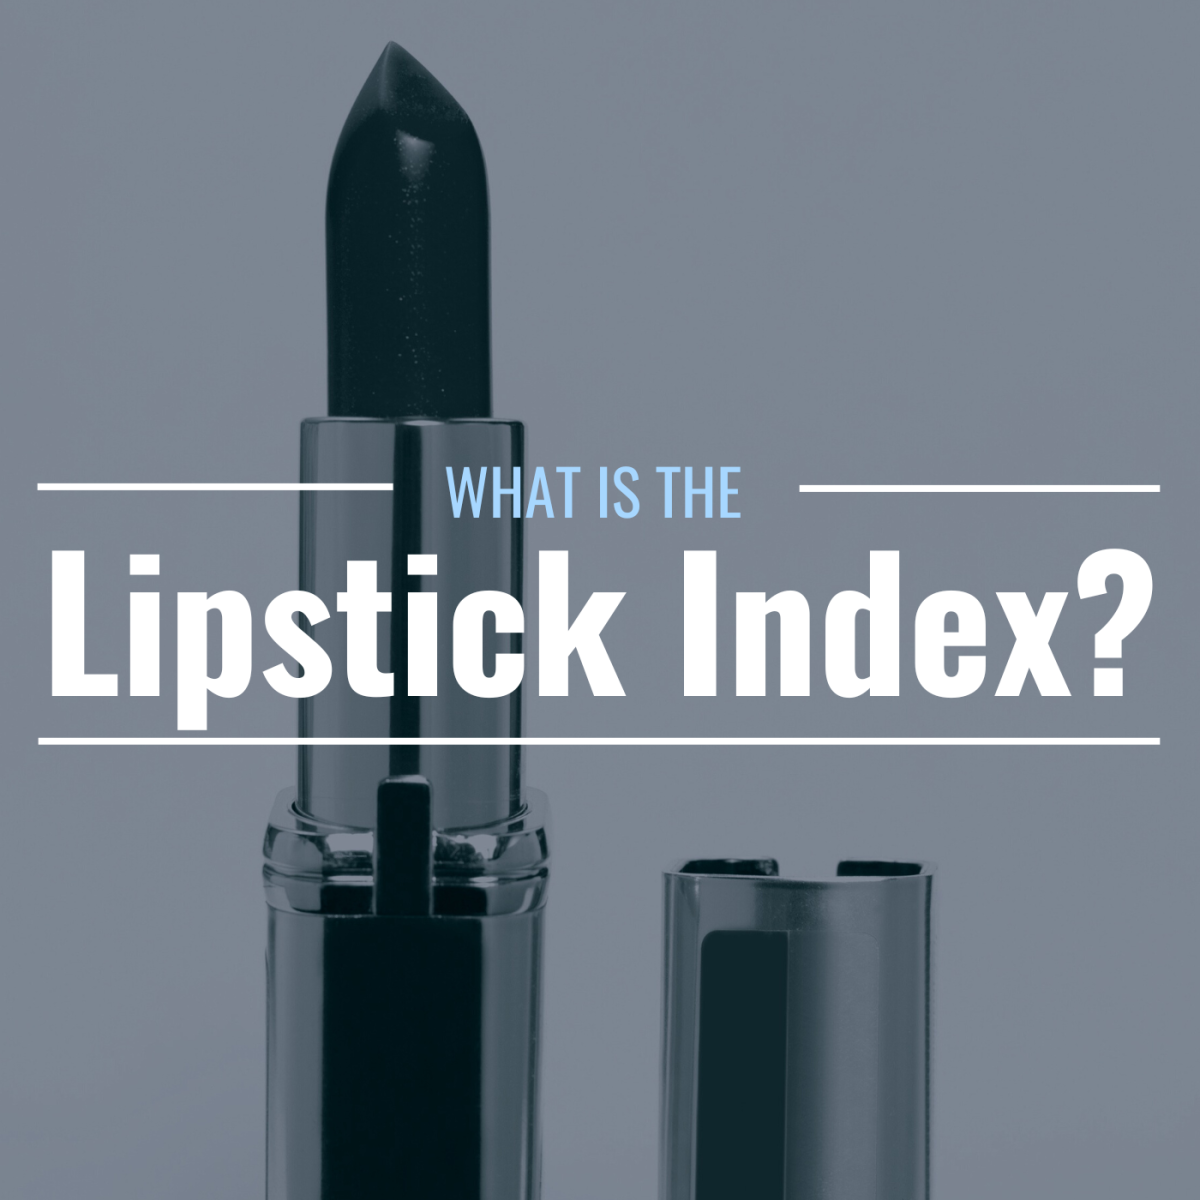 Lipstick Index